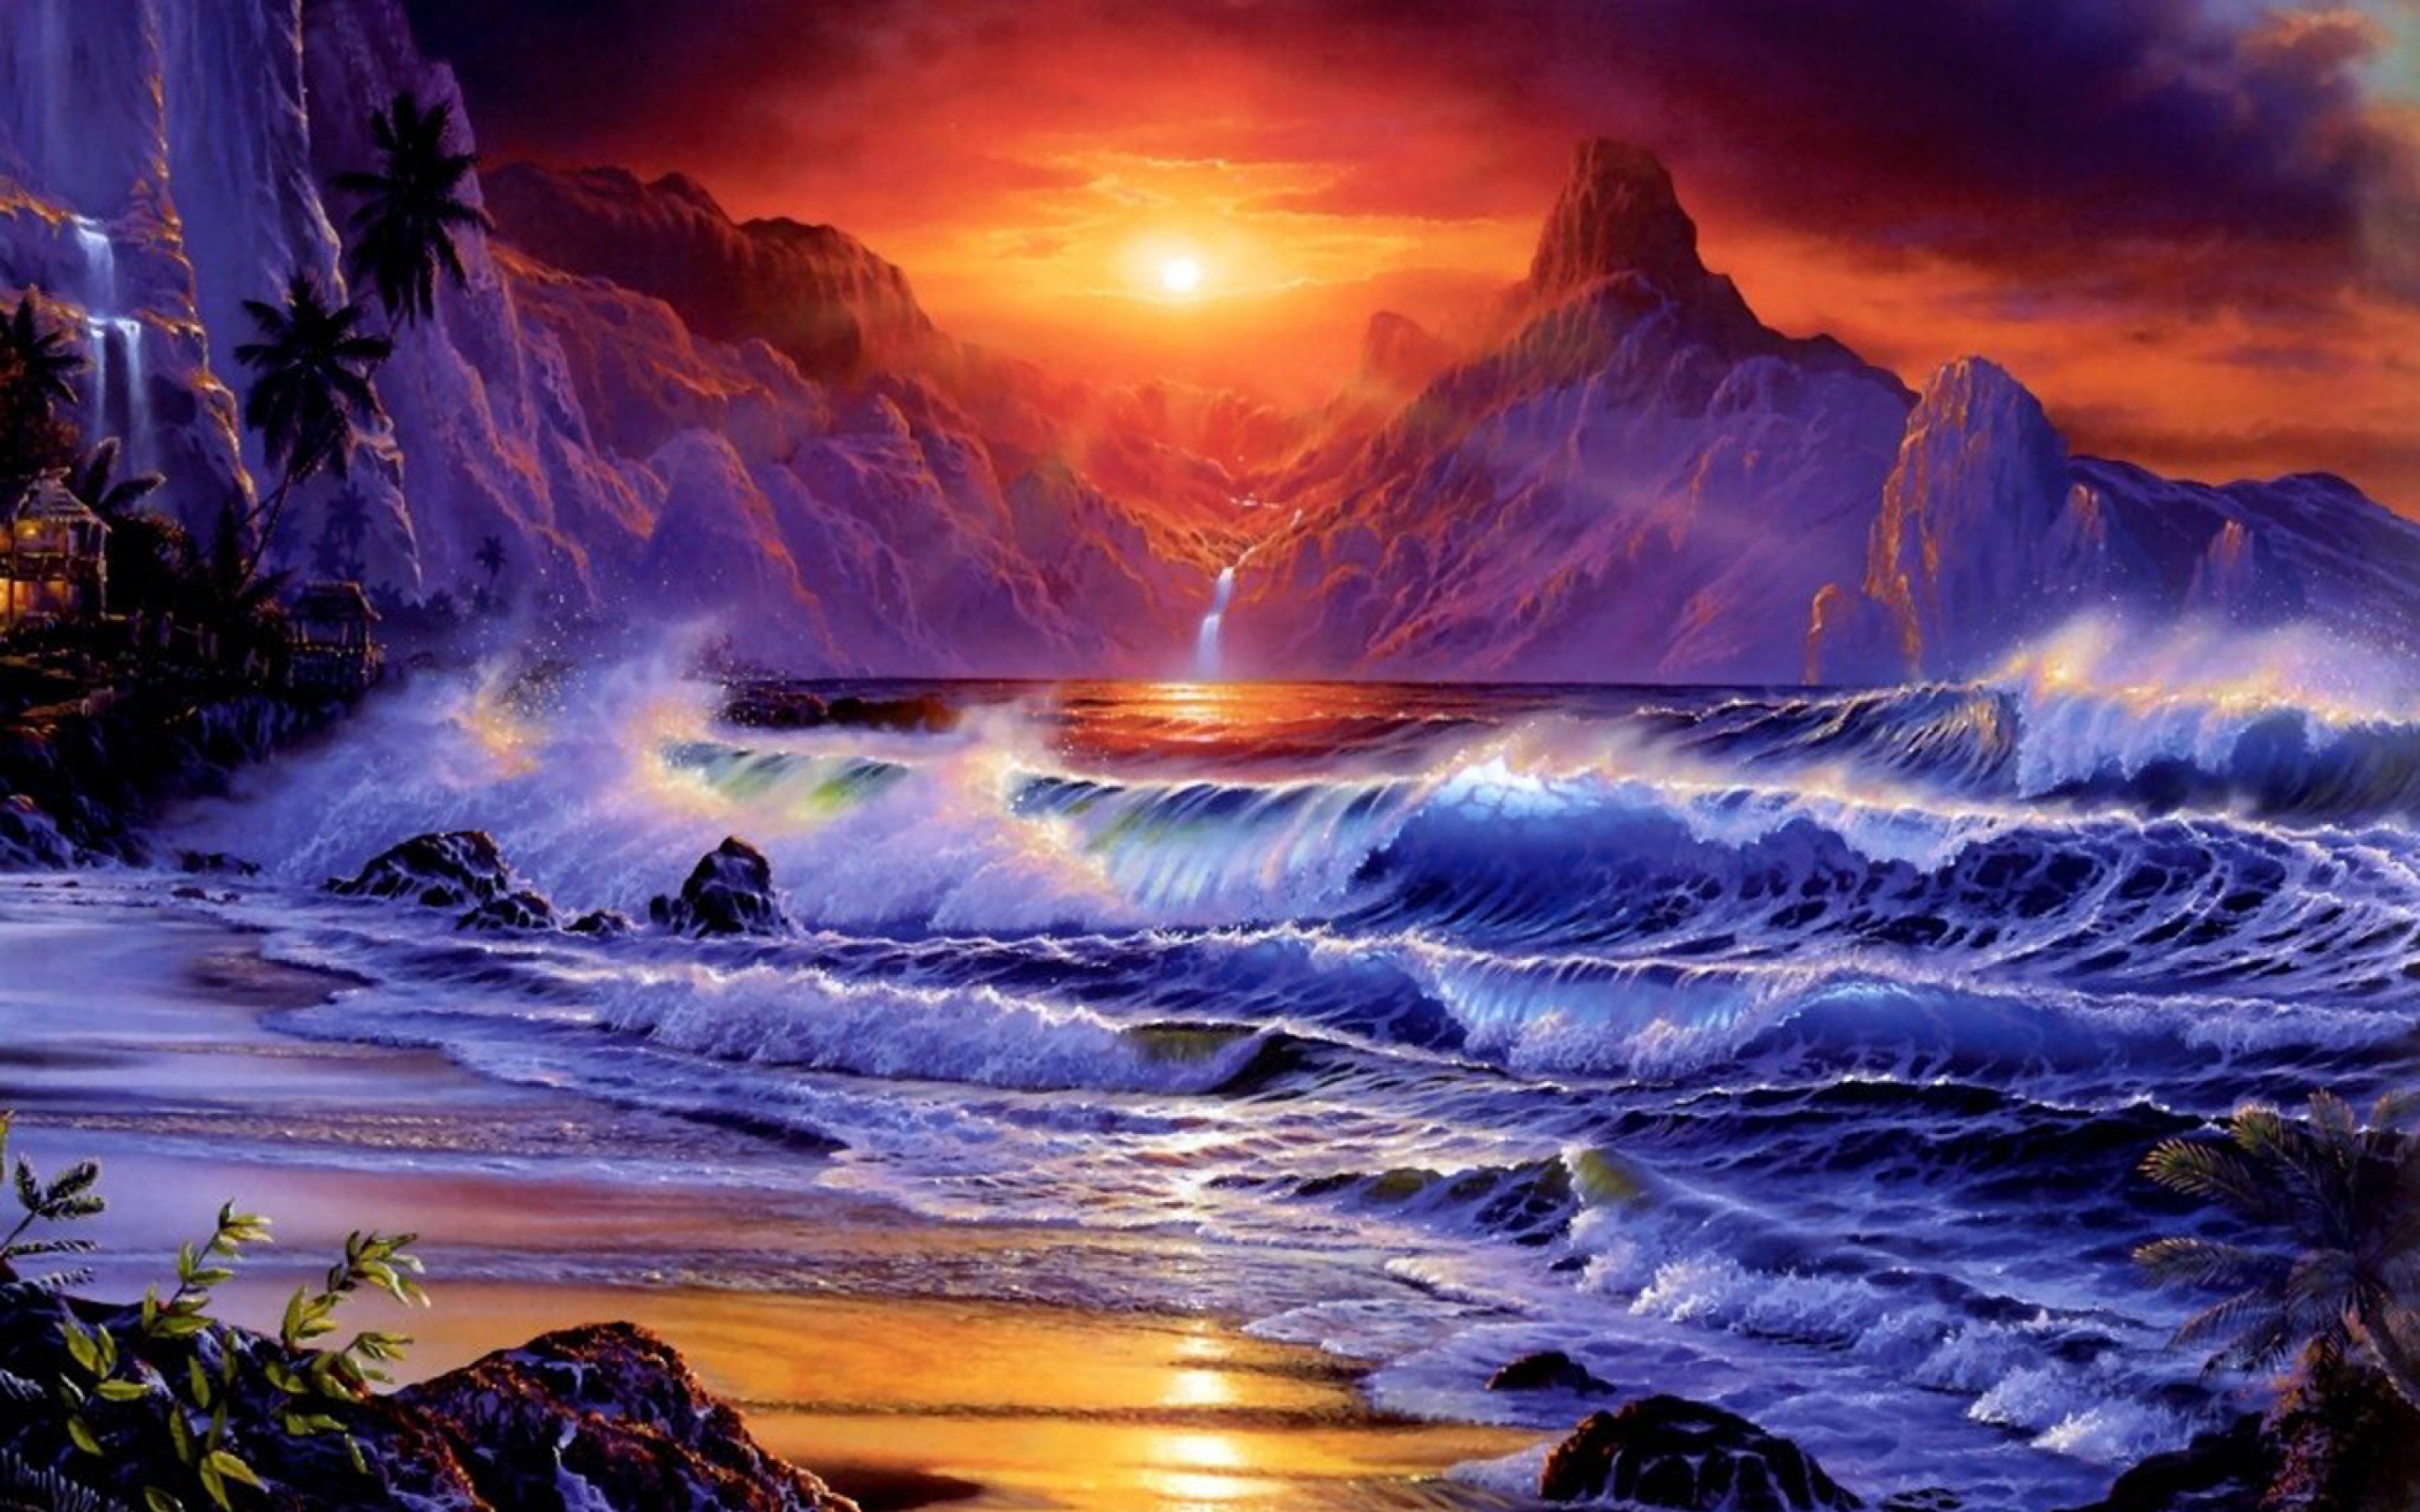 Sunset-sea-shore sea-waves-rocky mountains red sky-dark cloud Beautiful